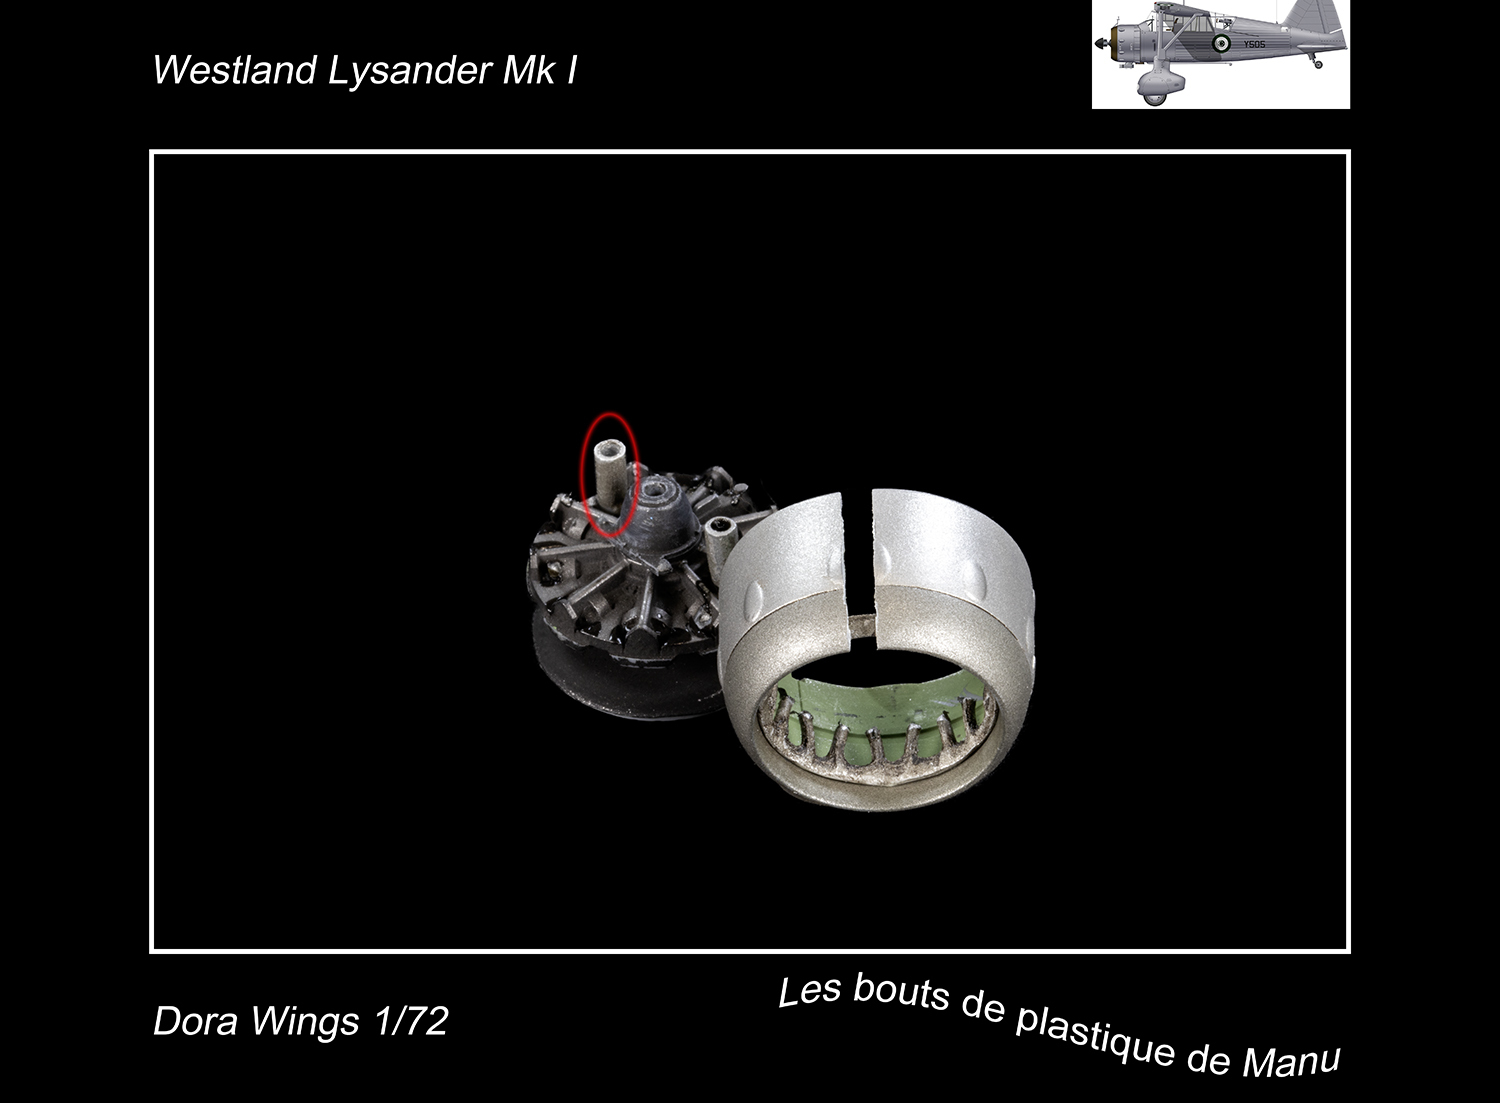 [Dora Wings] Westland Lysander Mk I - Je préfère en rire... - Page 5 Uf15